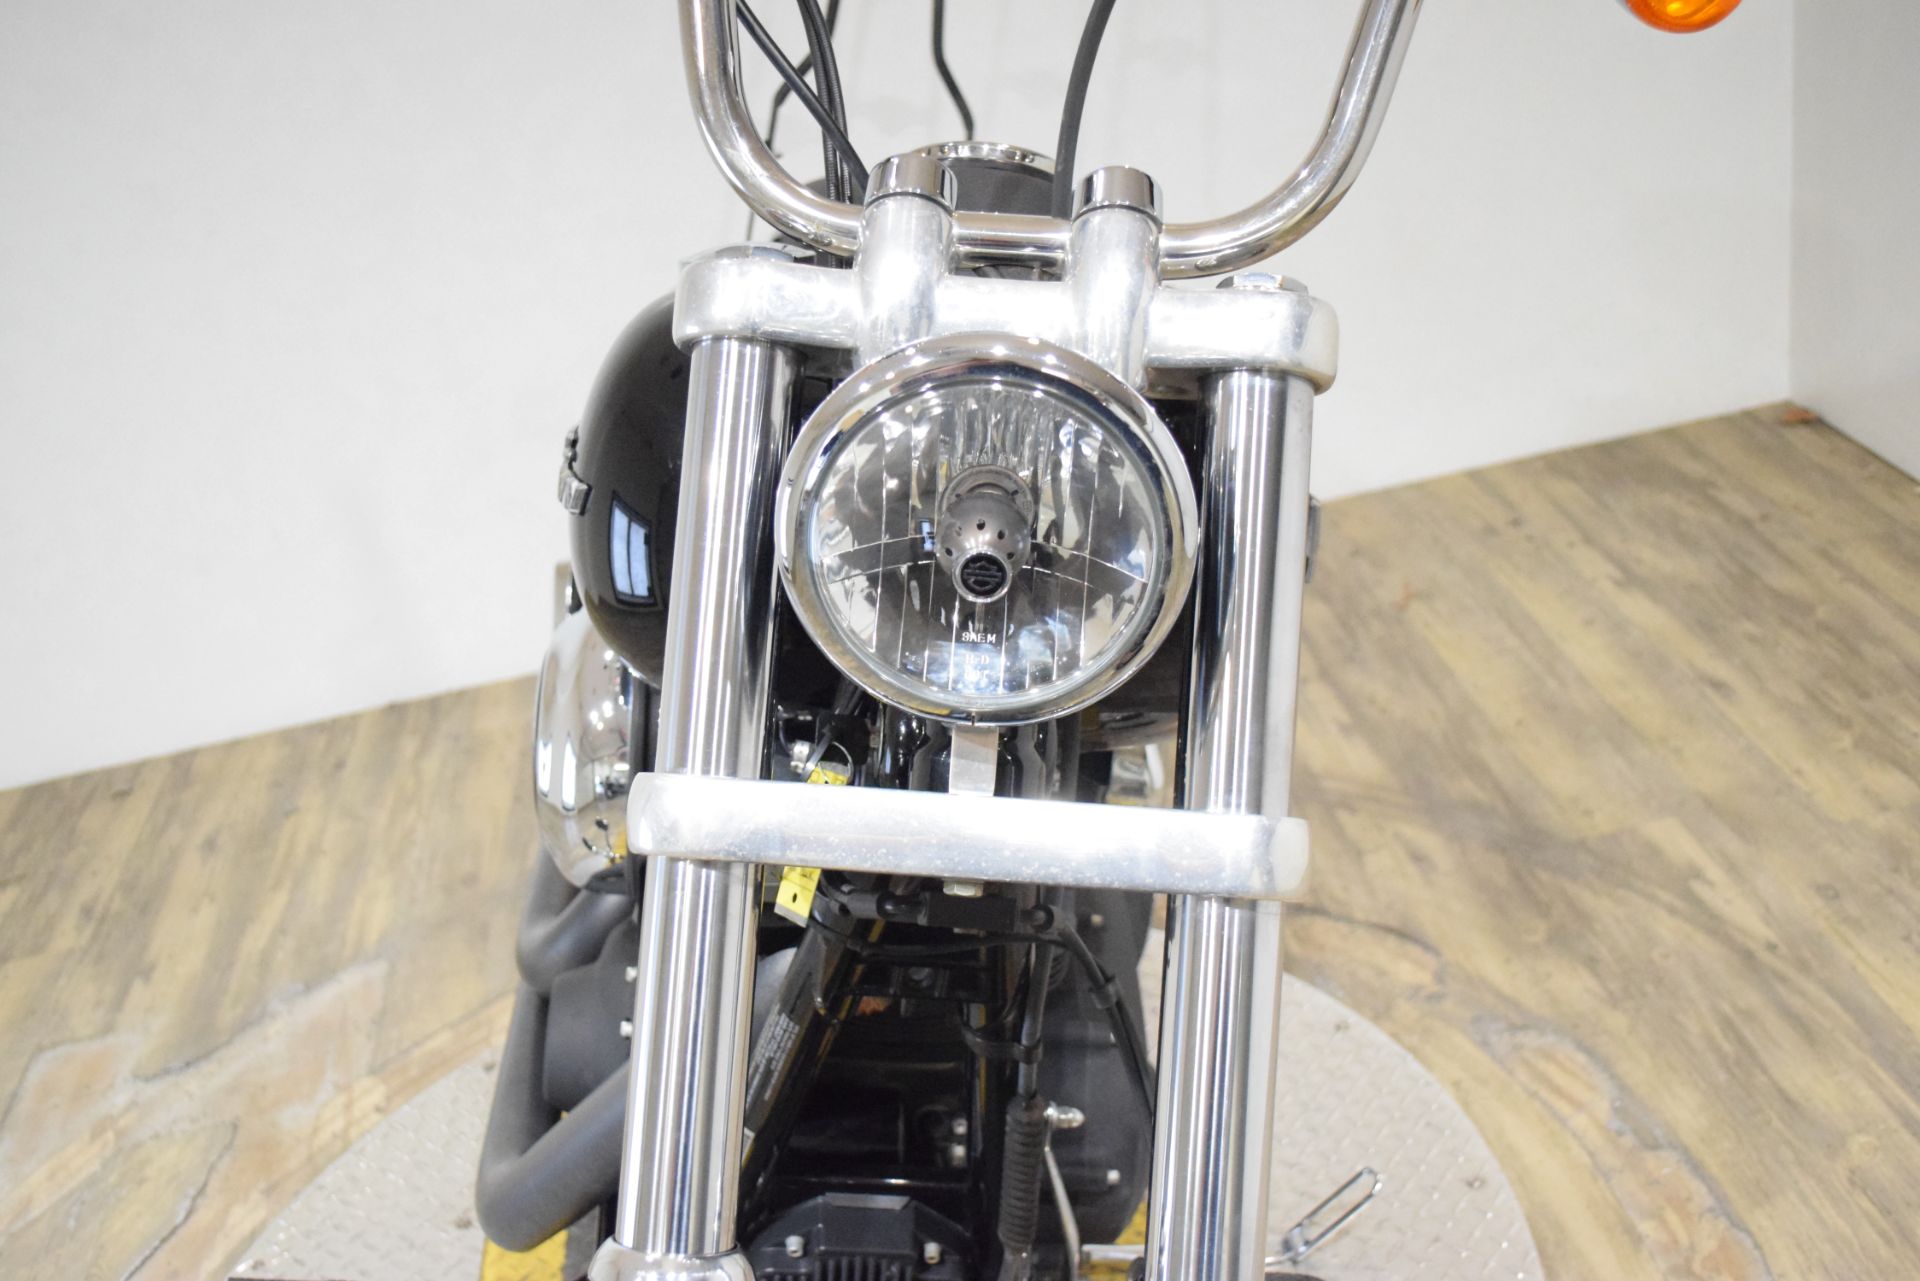 2012 Harley-Davidson Dyna® Street Bob® in Wauconda, Illinois - Photo 12